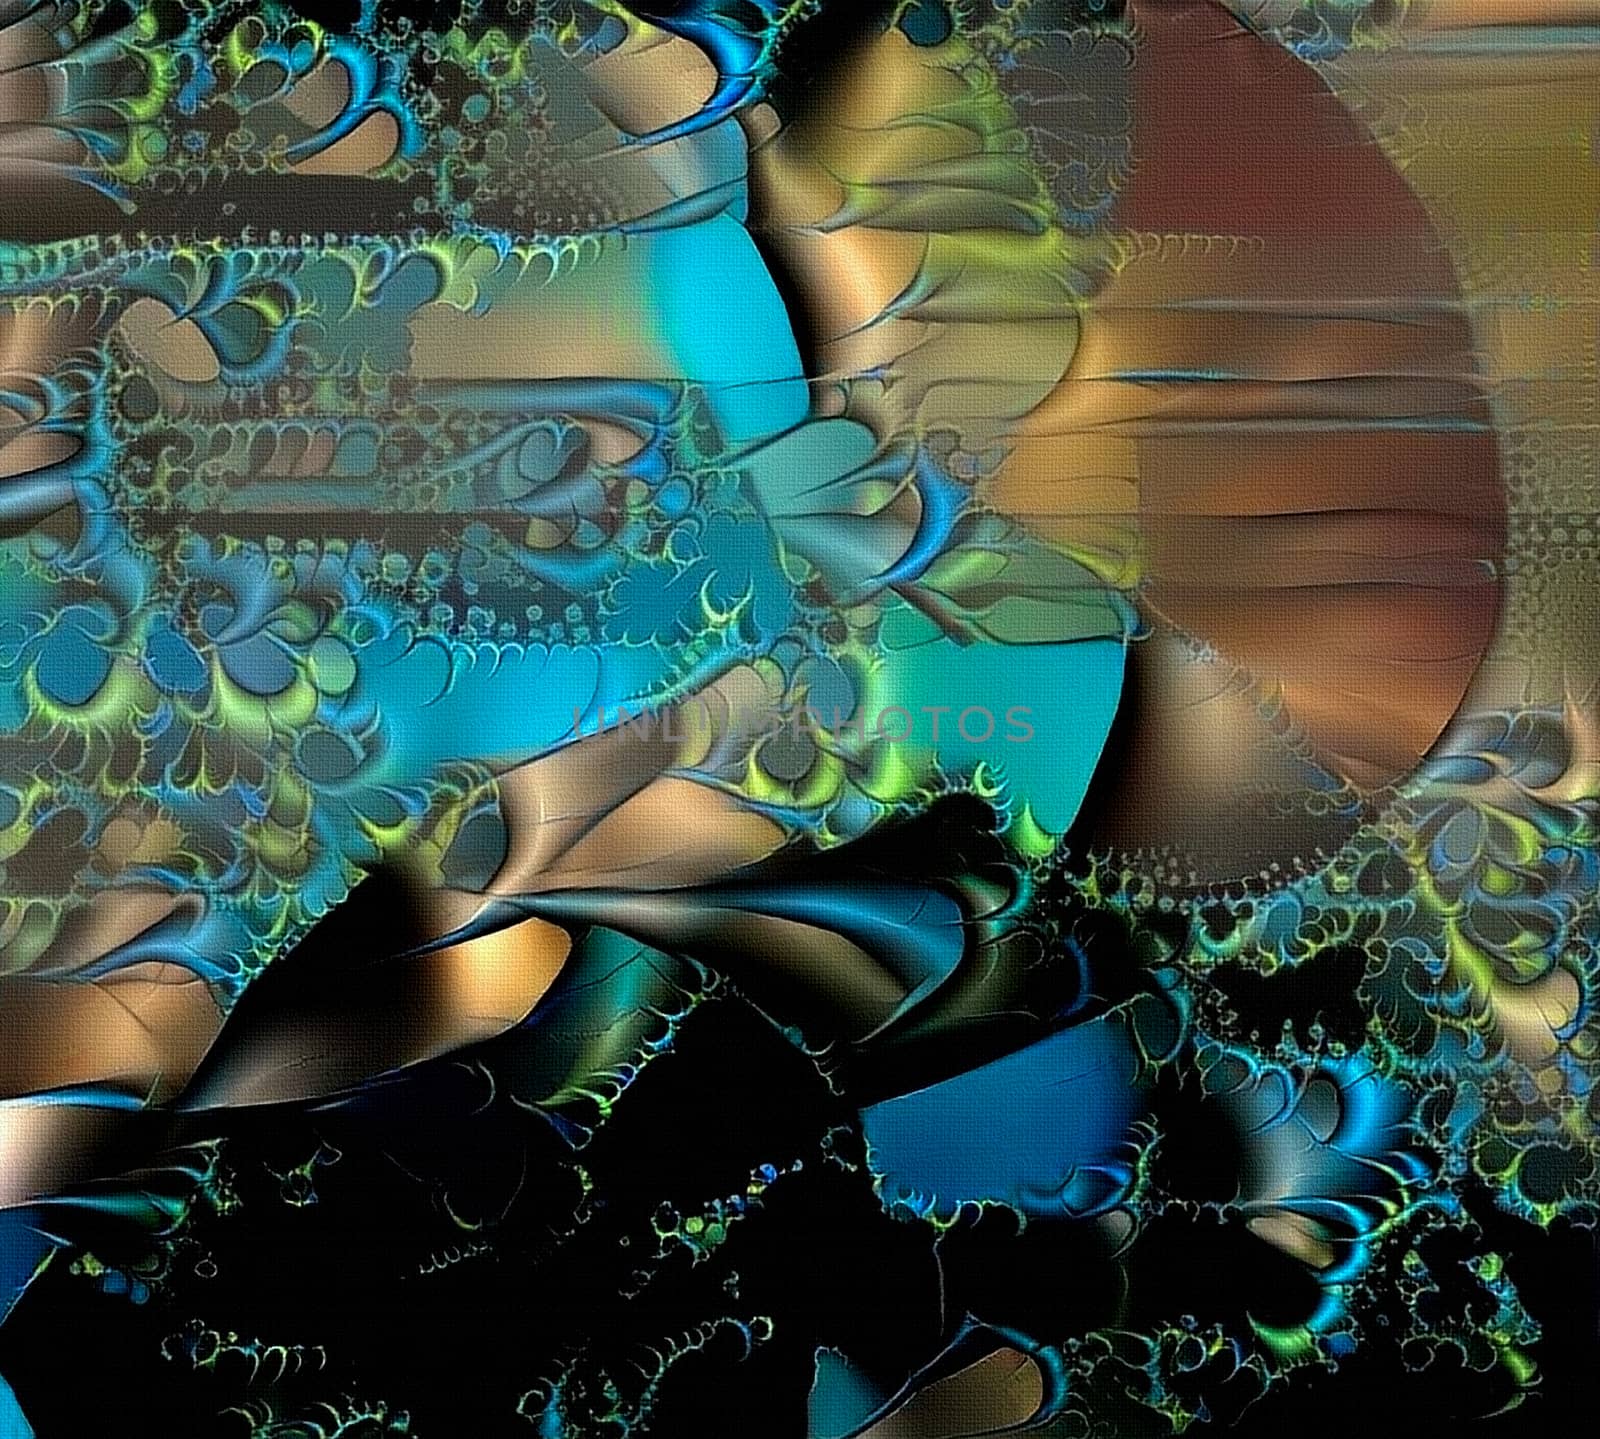 Vivid abstract painting. Fantastic fractal forms